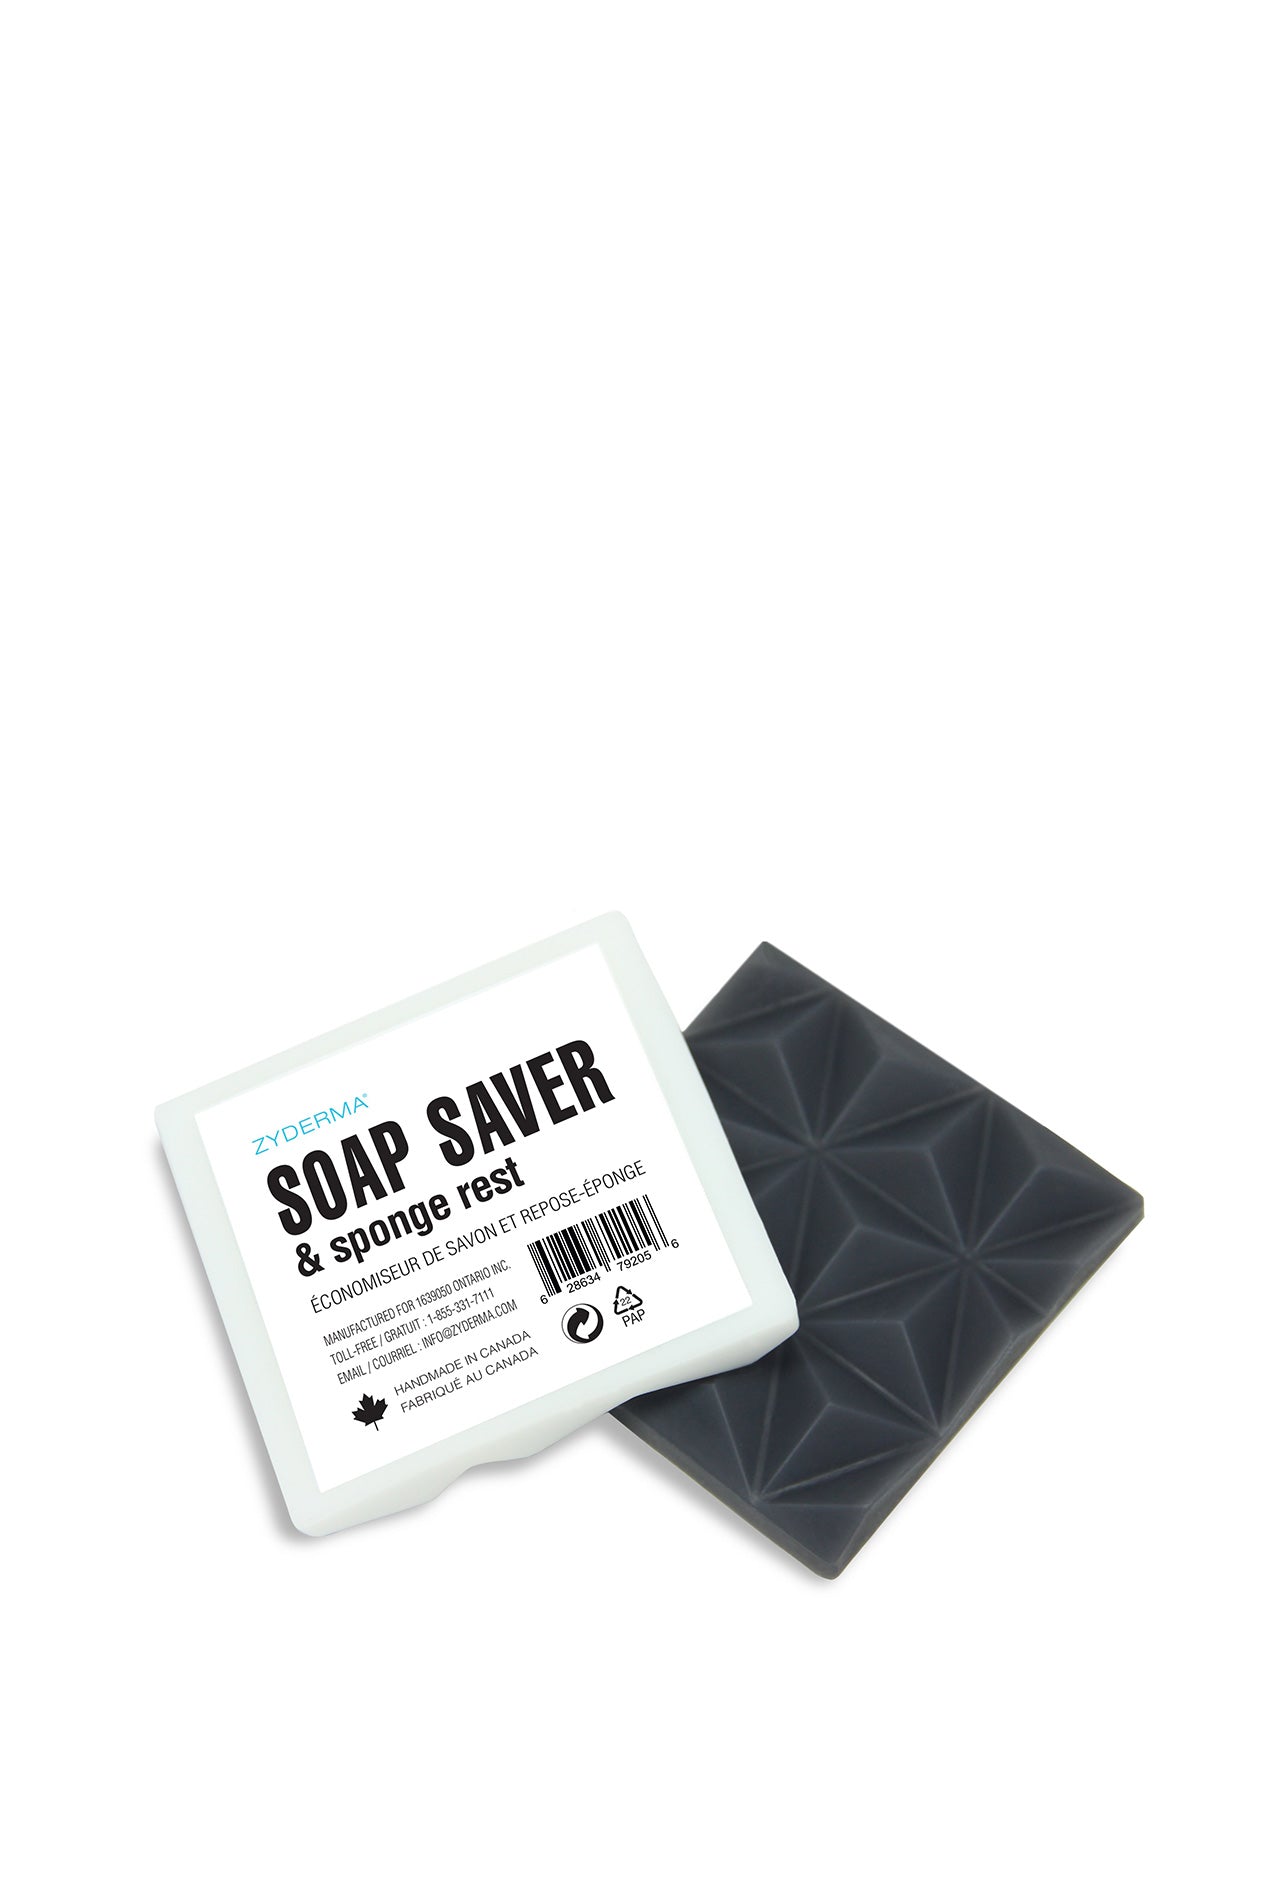 Soap Saver Sponge Rest